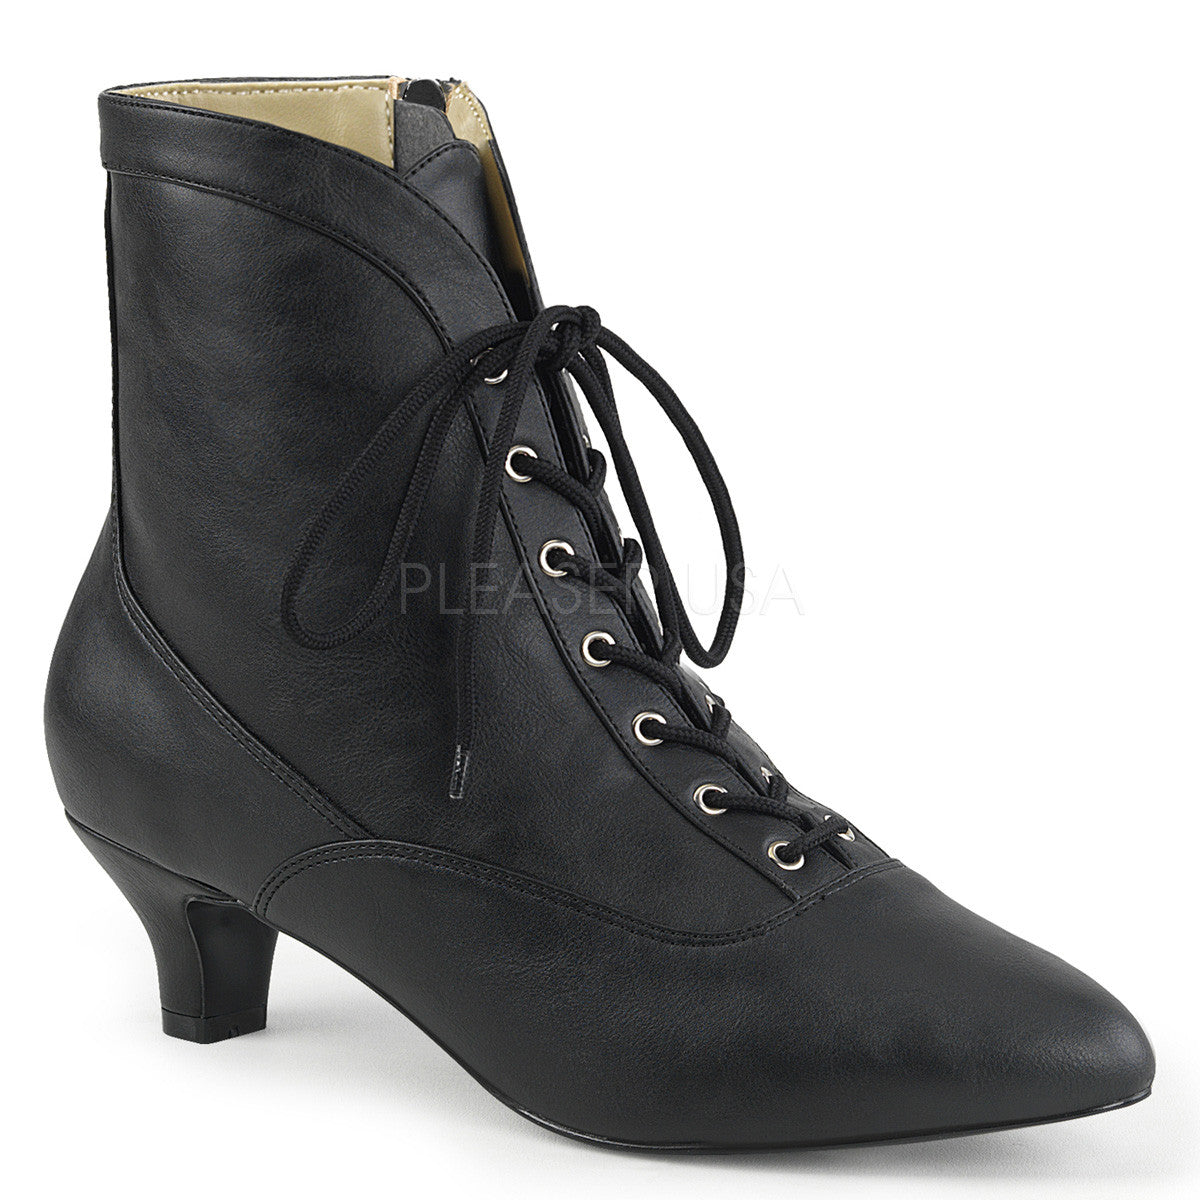 Pleaser Pink Label FAB-1005 Black Faux Leather Ankle Boots - Shoecup.com